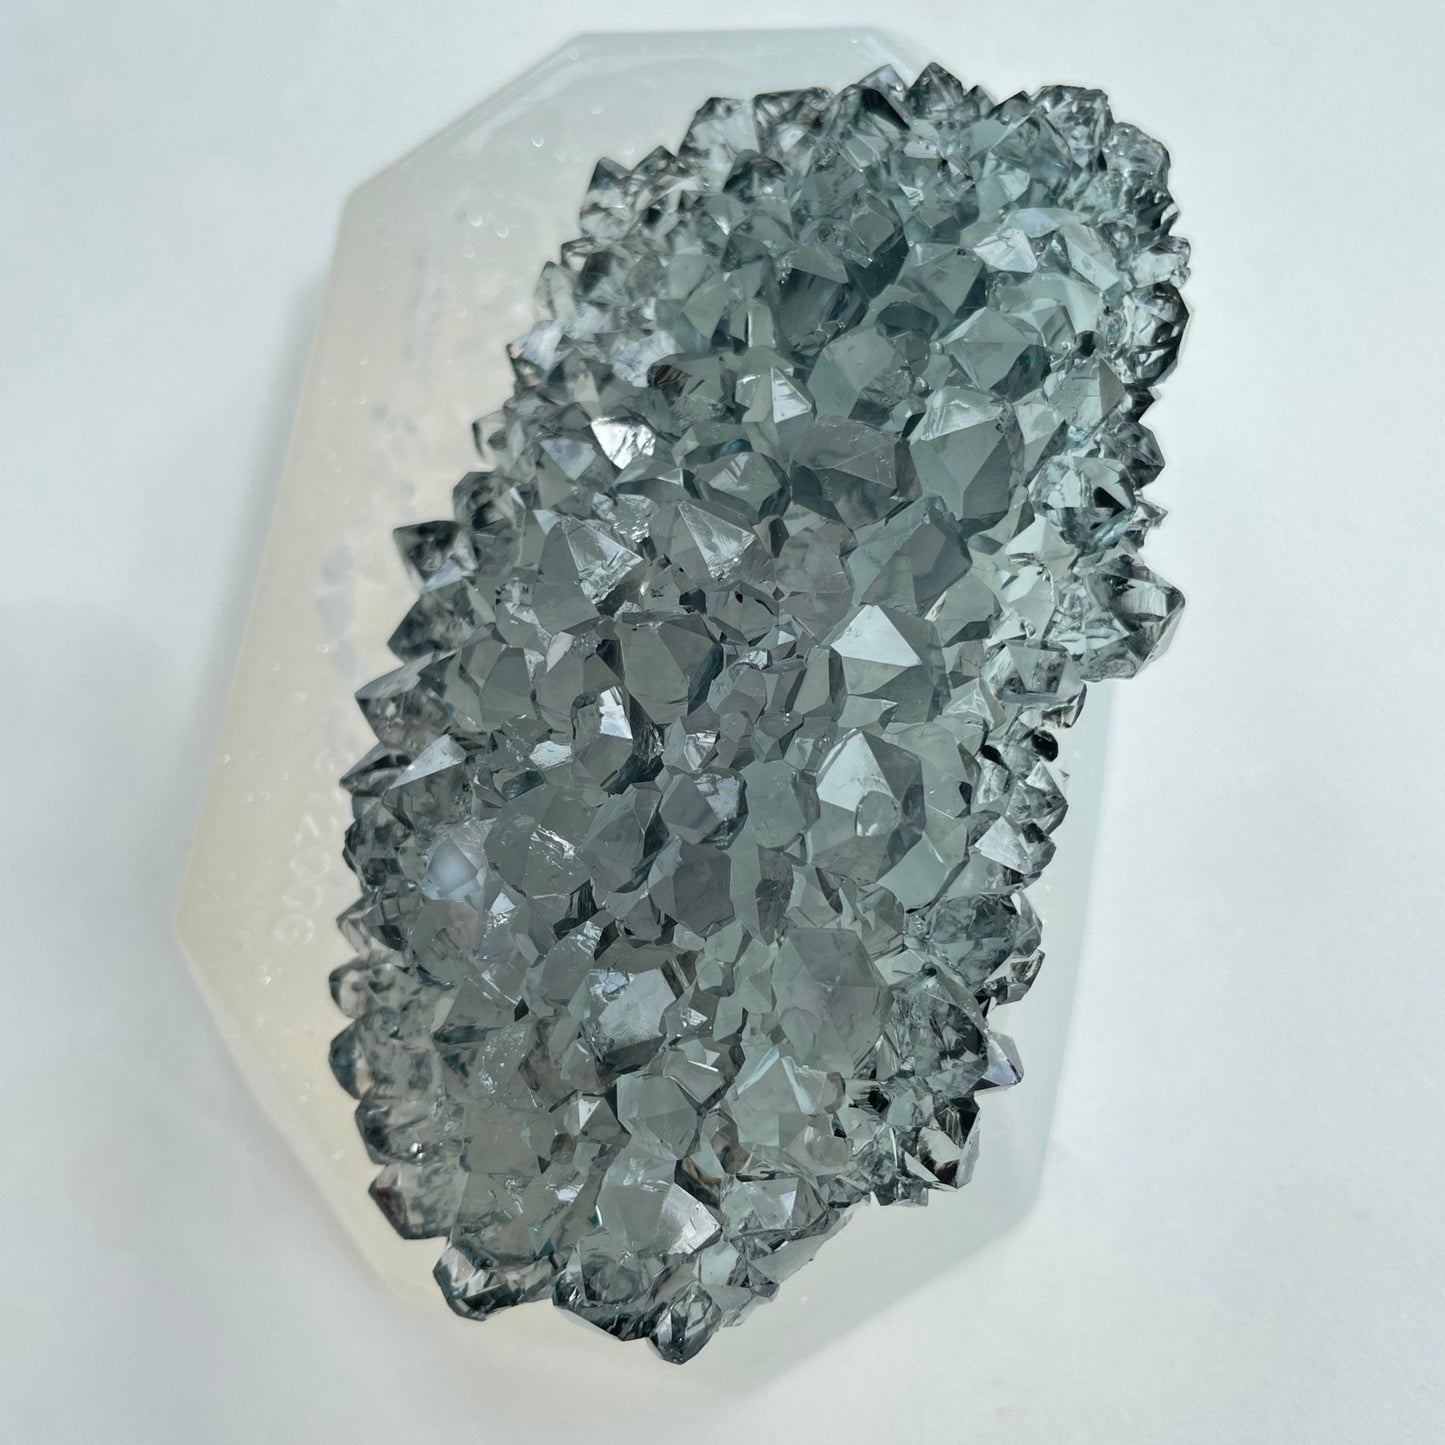 Unglaubliche Amethyst-Kristall-Cluster-Silikonform